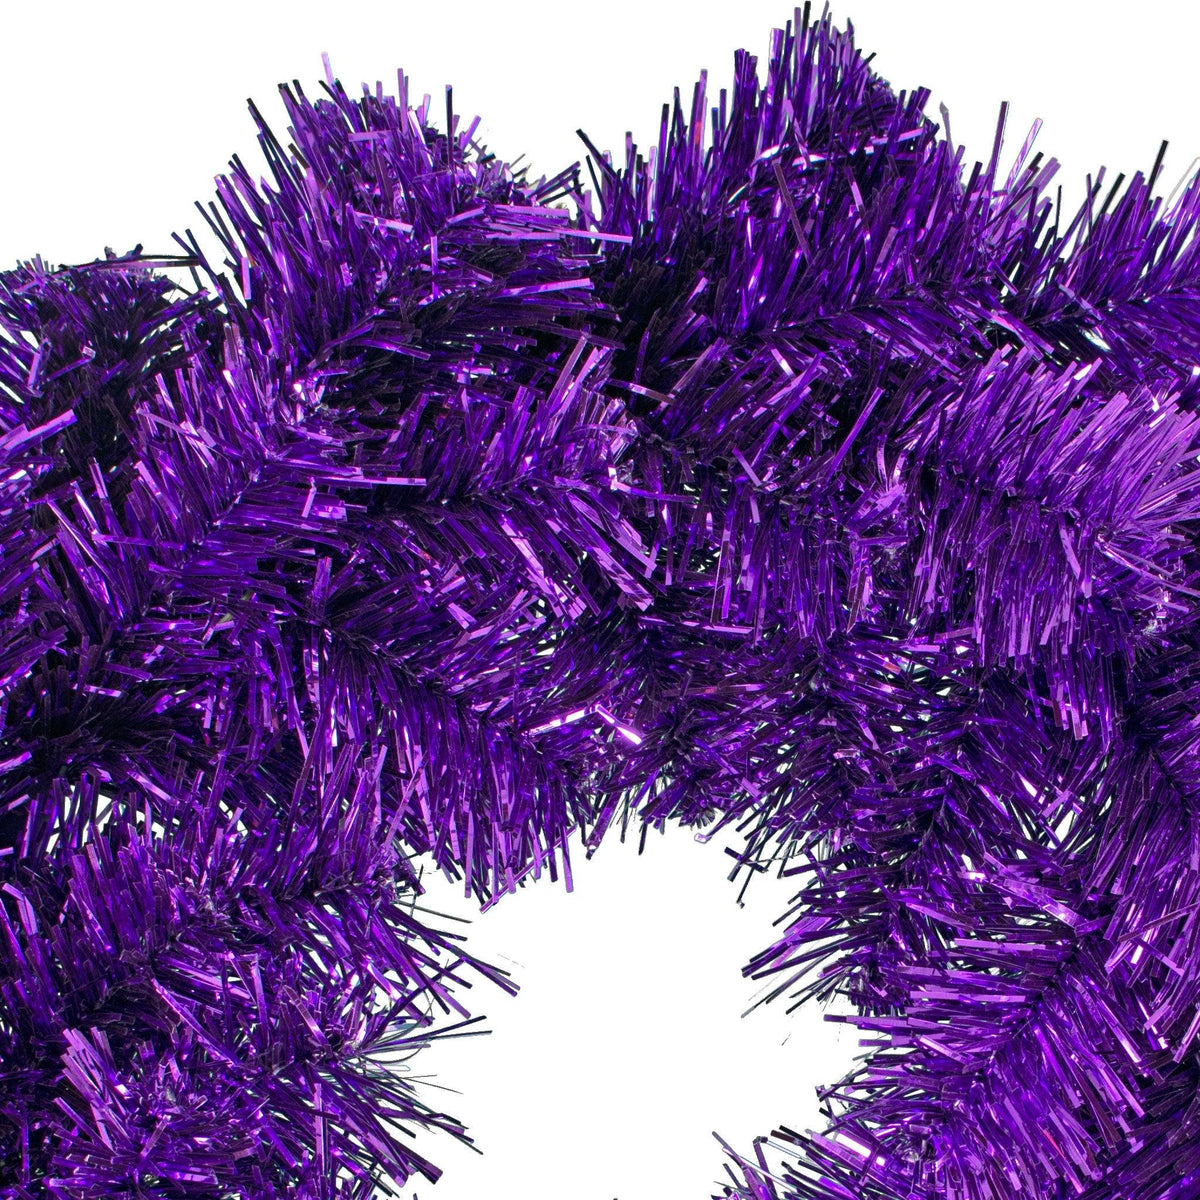 12 x 6mm Chenille Stems: Purple – The Wreath Shop